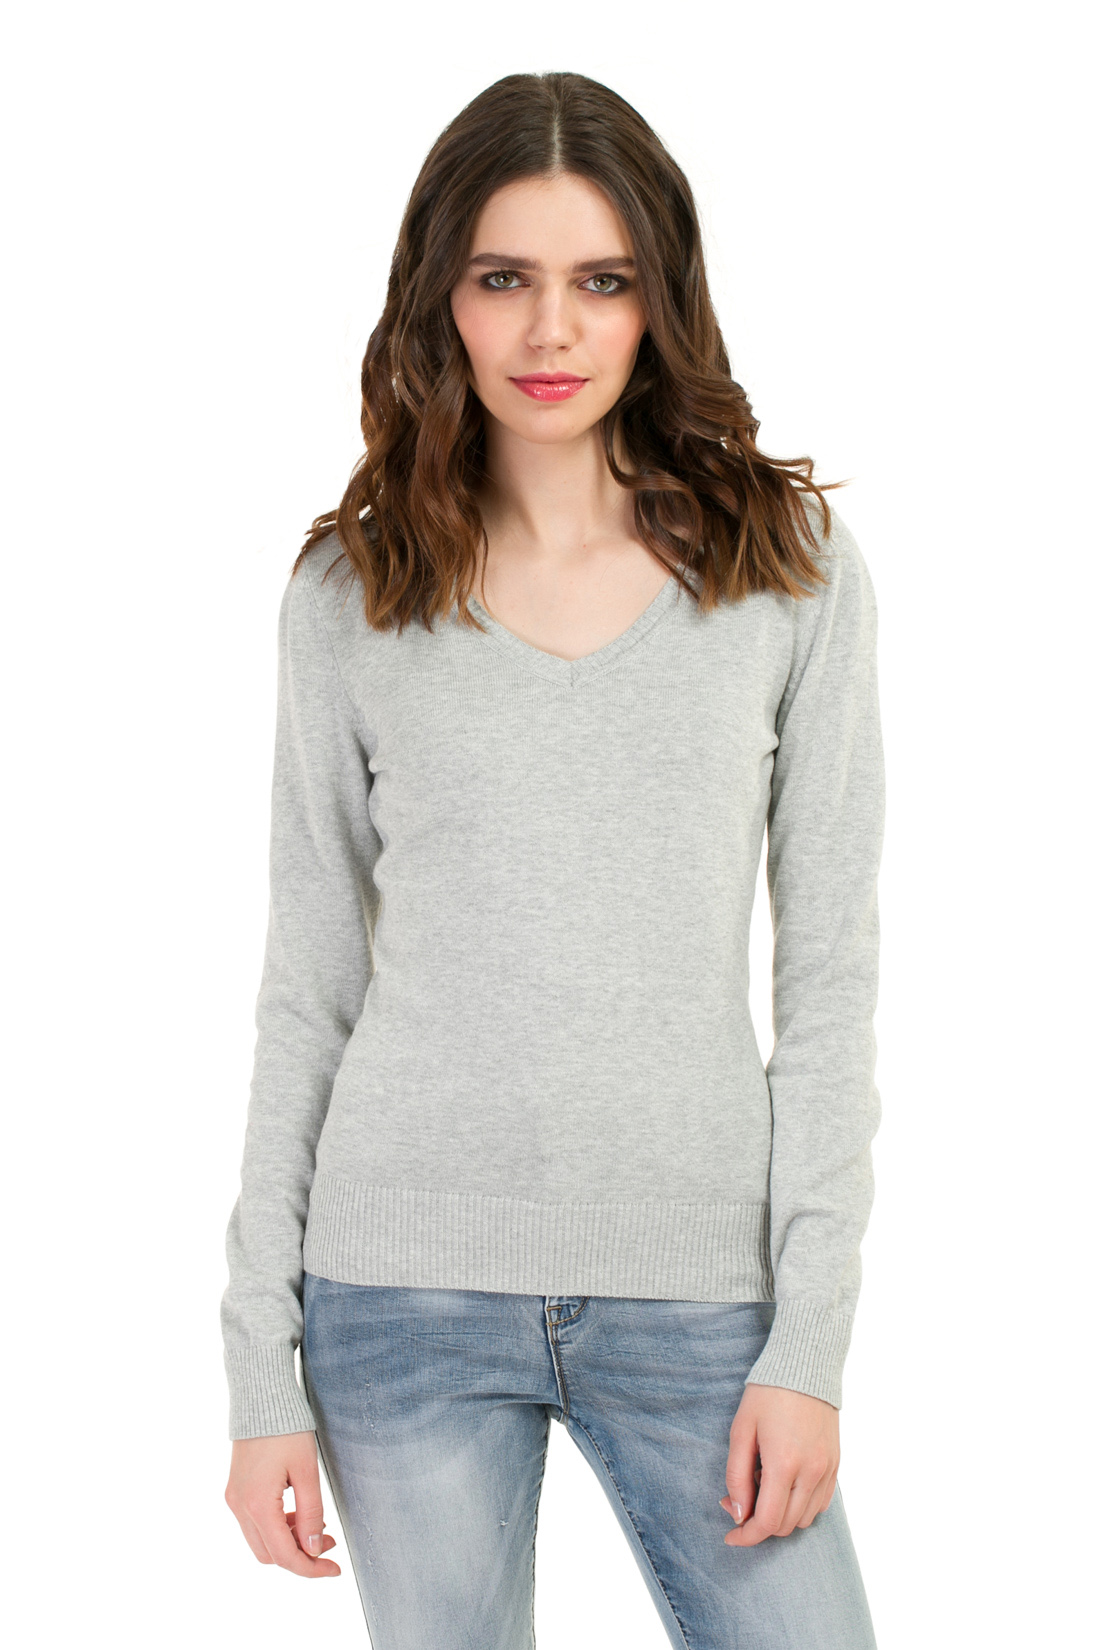 Базовый пуловер из хлопка (арт. baon B137201), размер XXL, цвет silver melange#серый Базовый пуловер из хлопка (арт. baon B137201) - фото 1